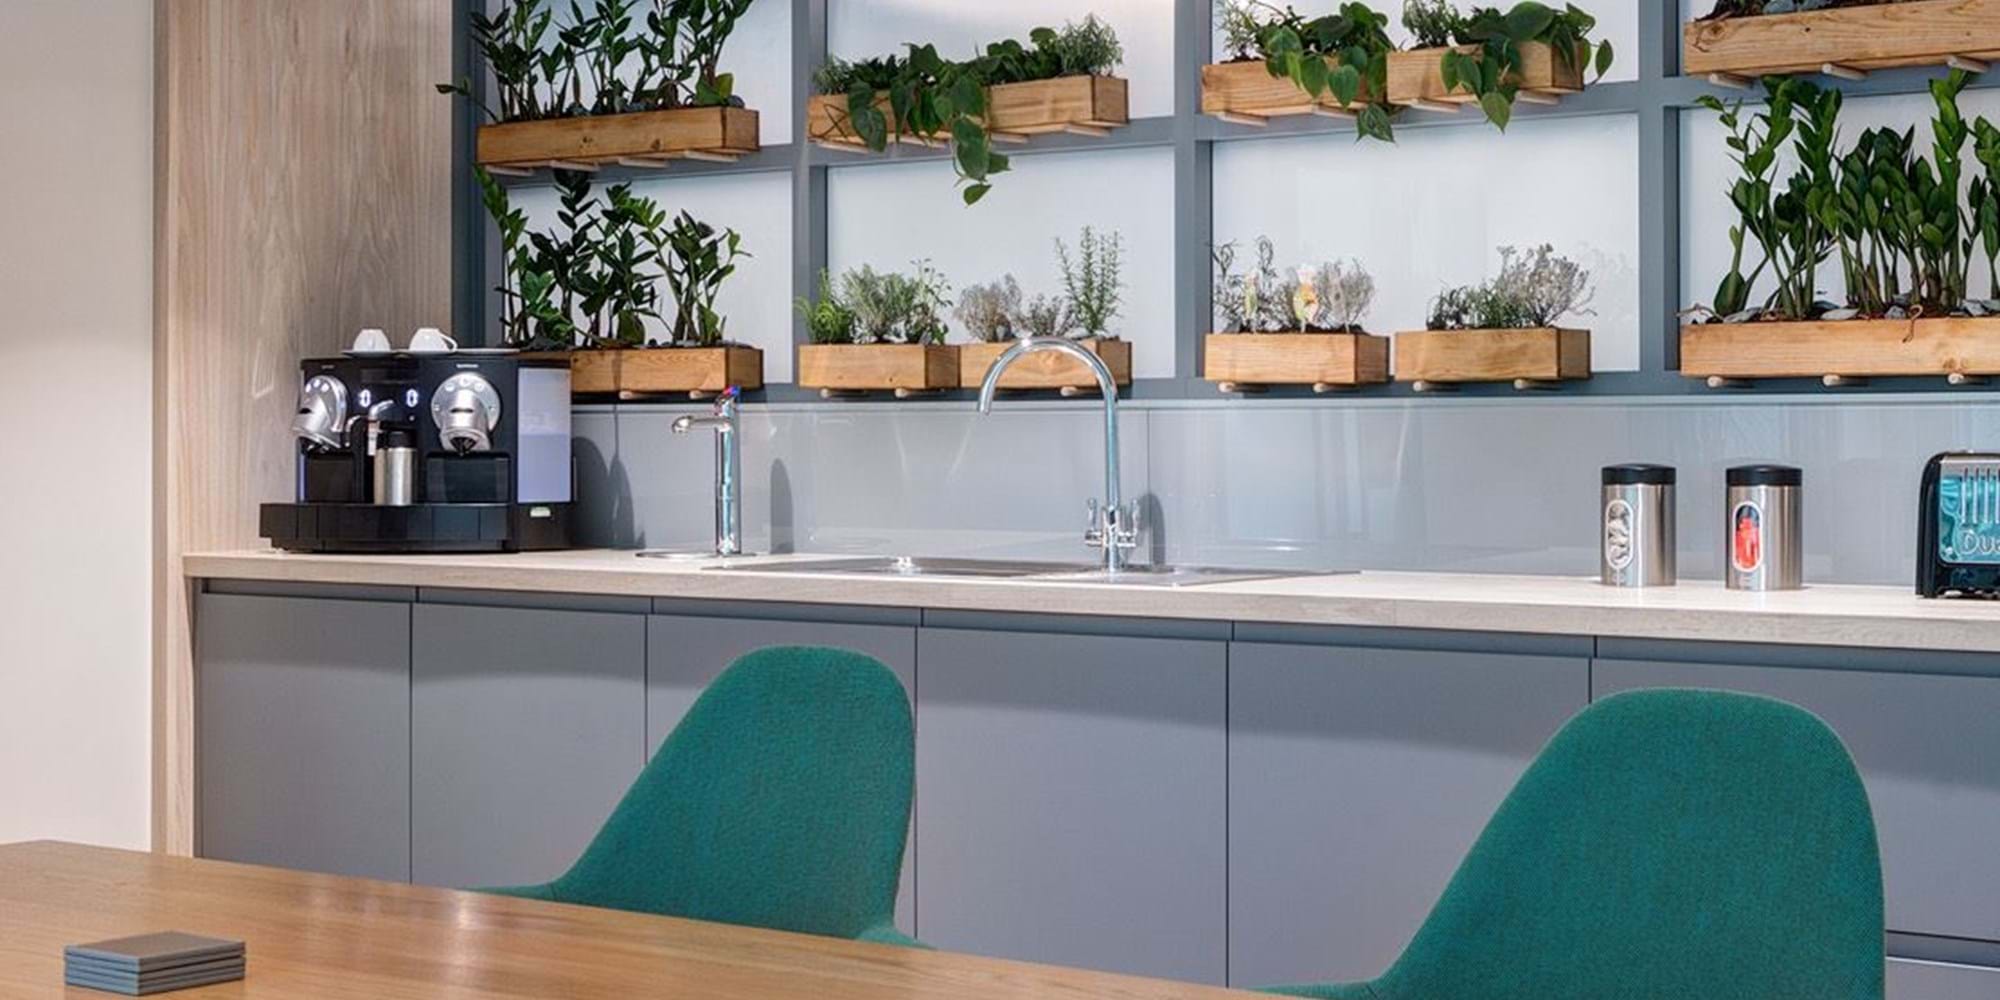 Modus Workspace office design, fit out and refurbishment - Vitruvian - Teapoint - Vitruvian 06 bis highres sRGB.jpg